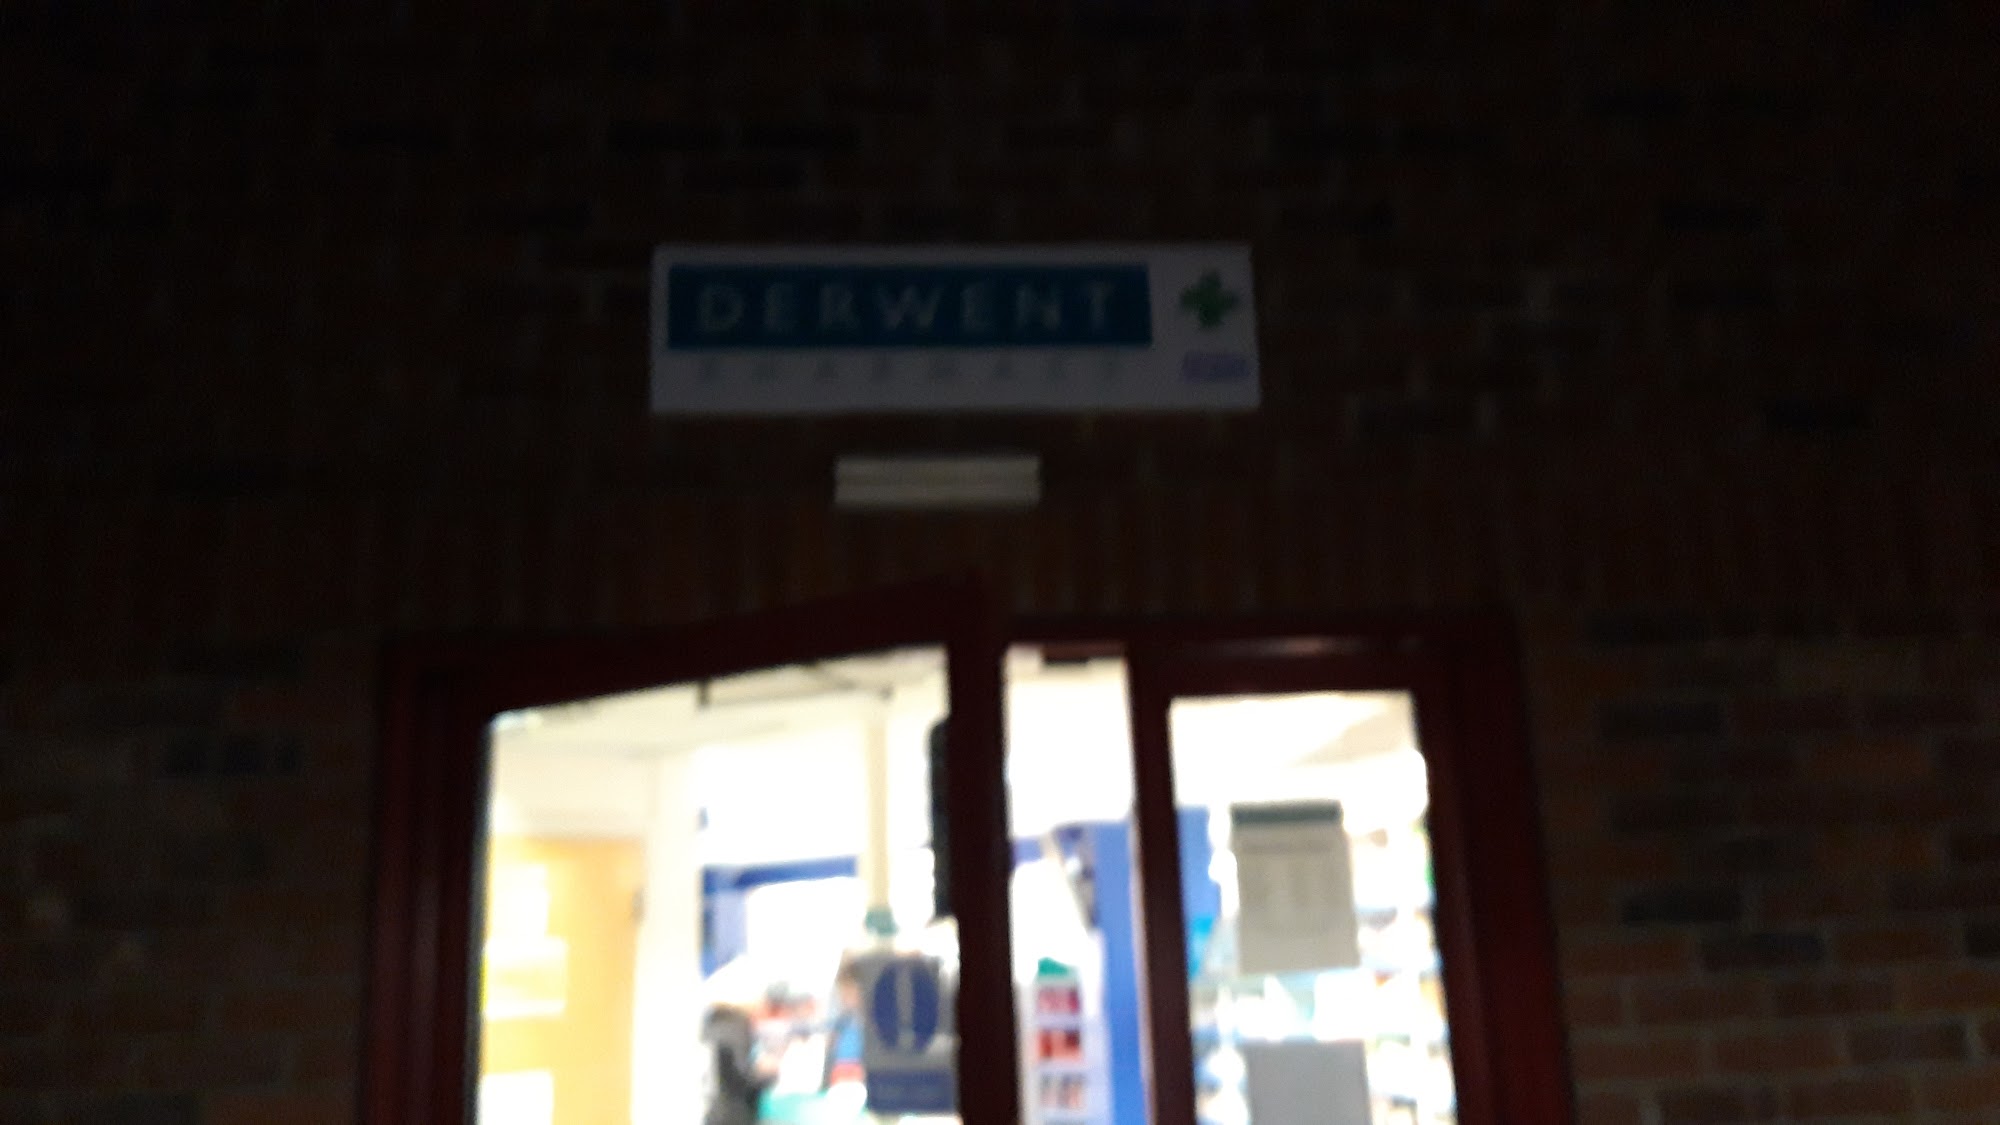 Derwent Pharmacy Limited